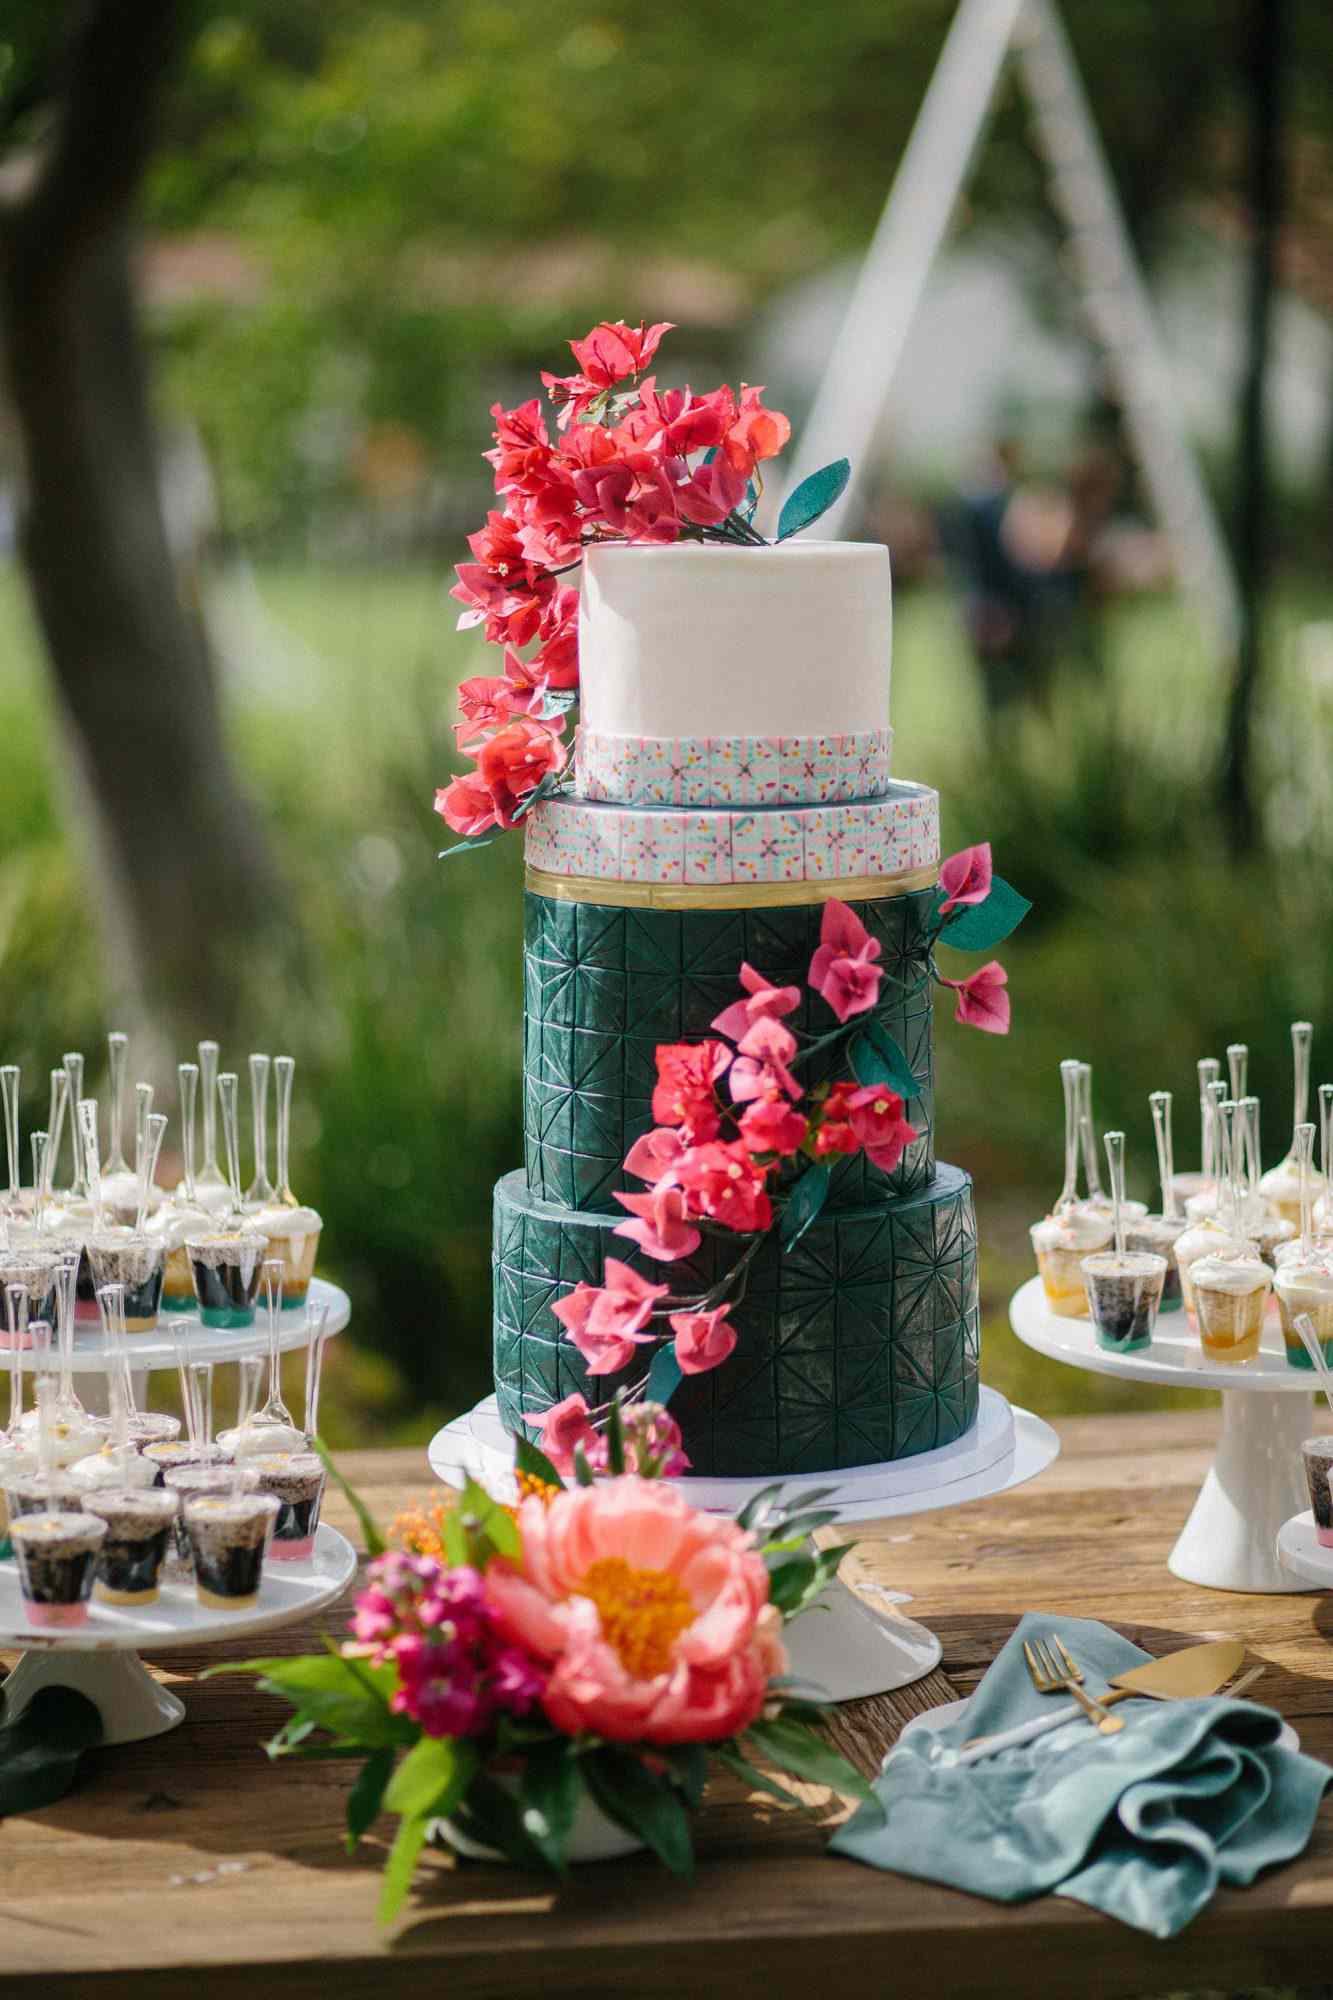 An Inspired Wedding Cake